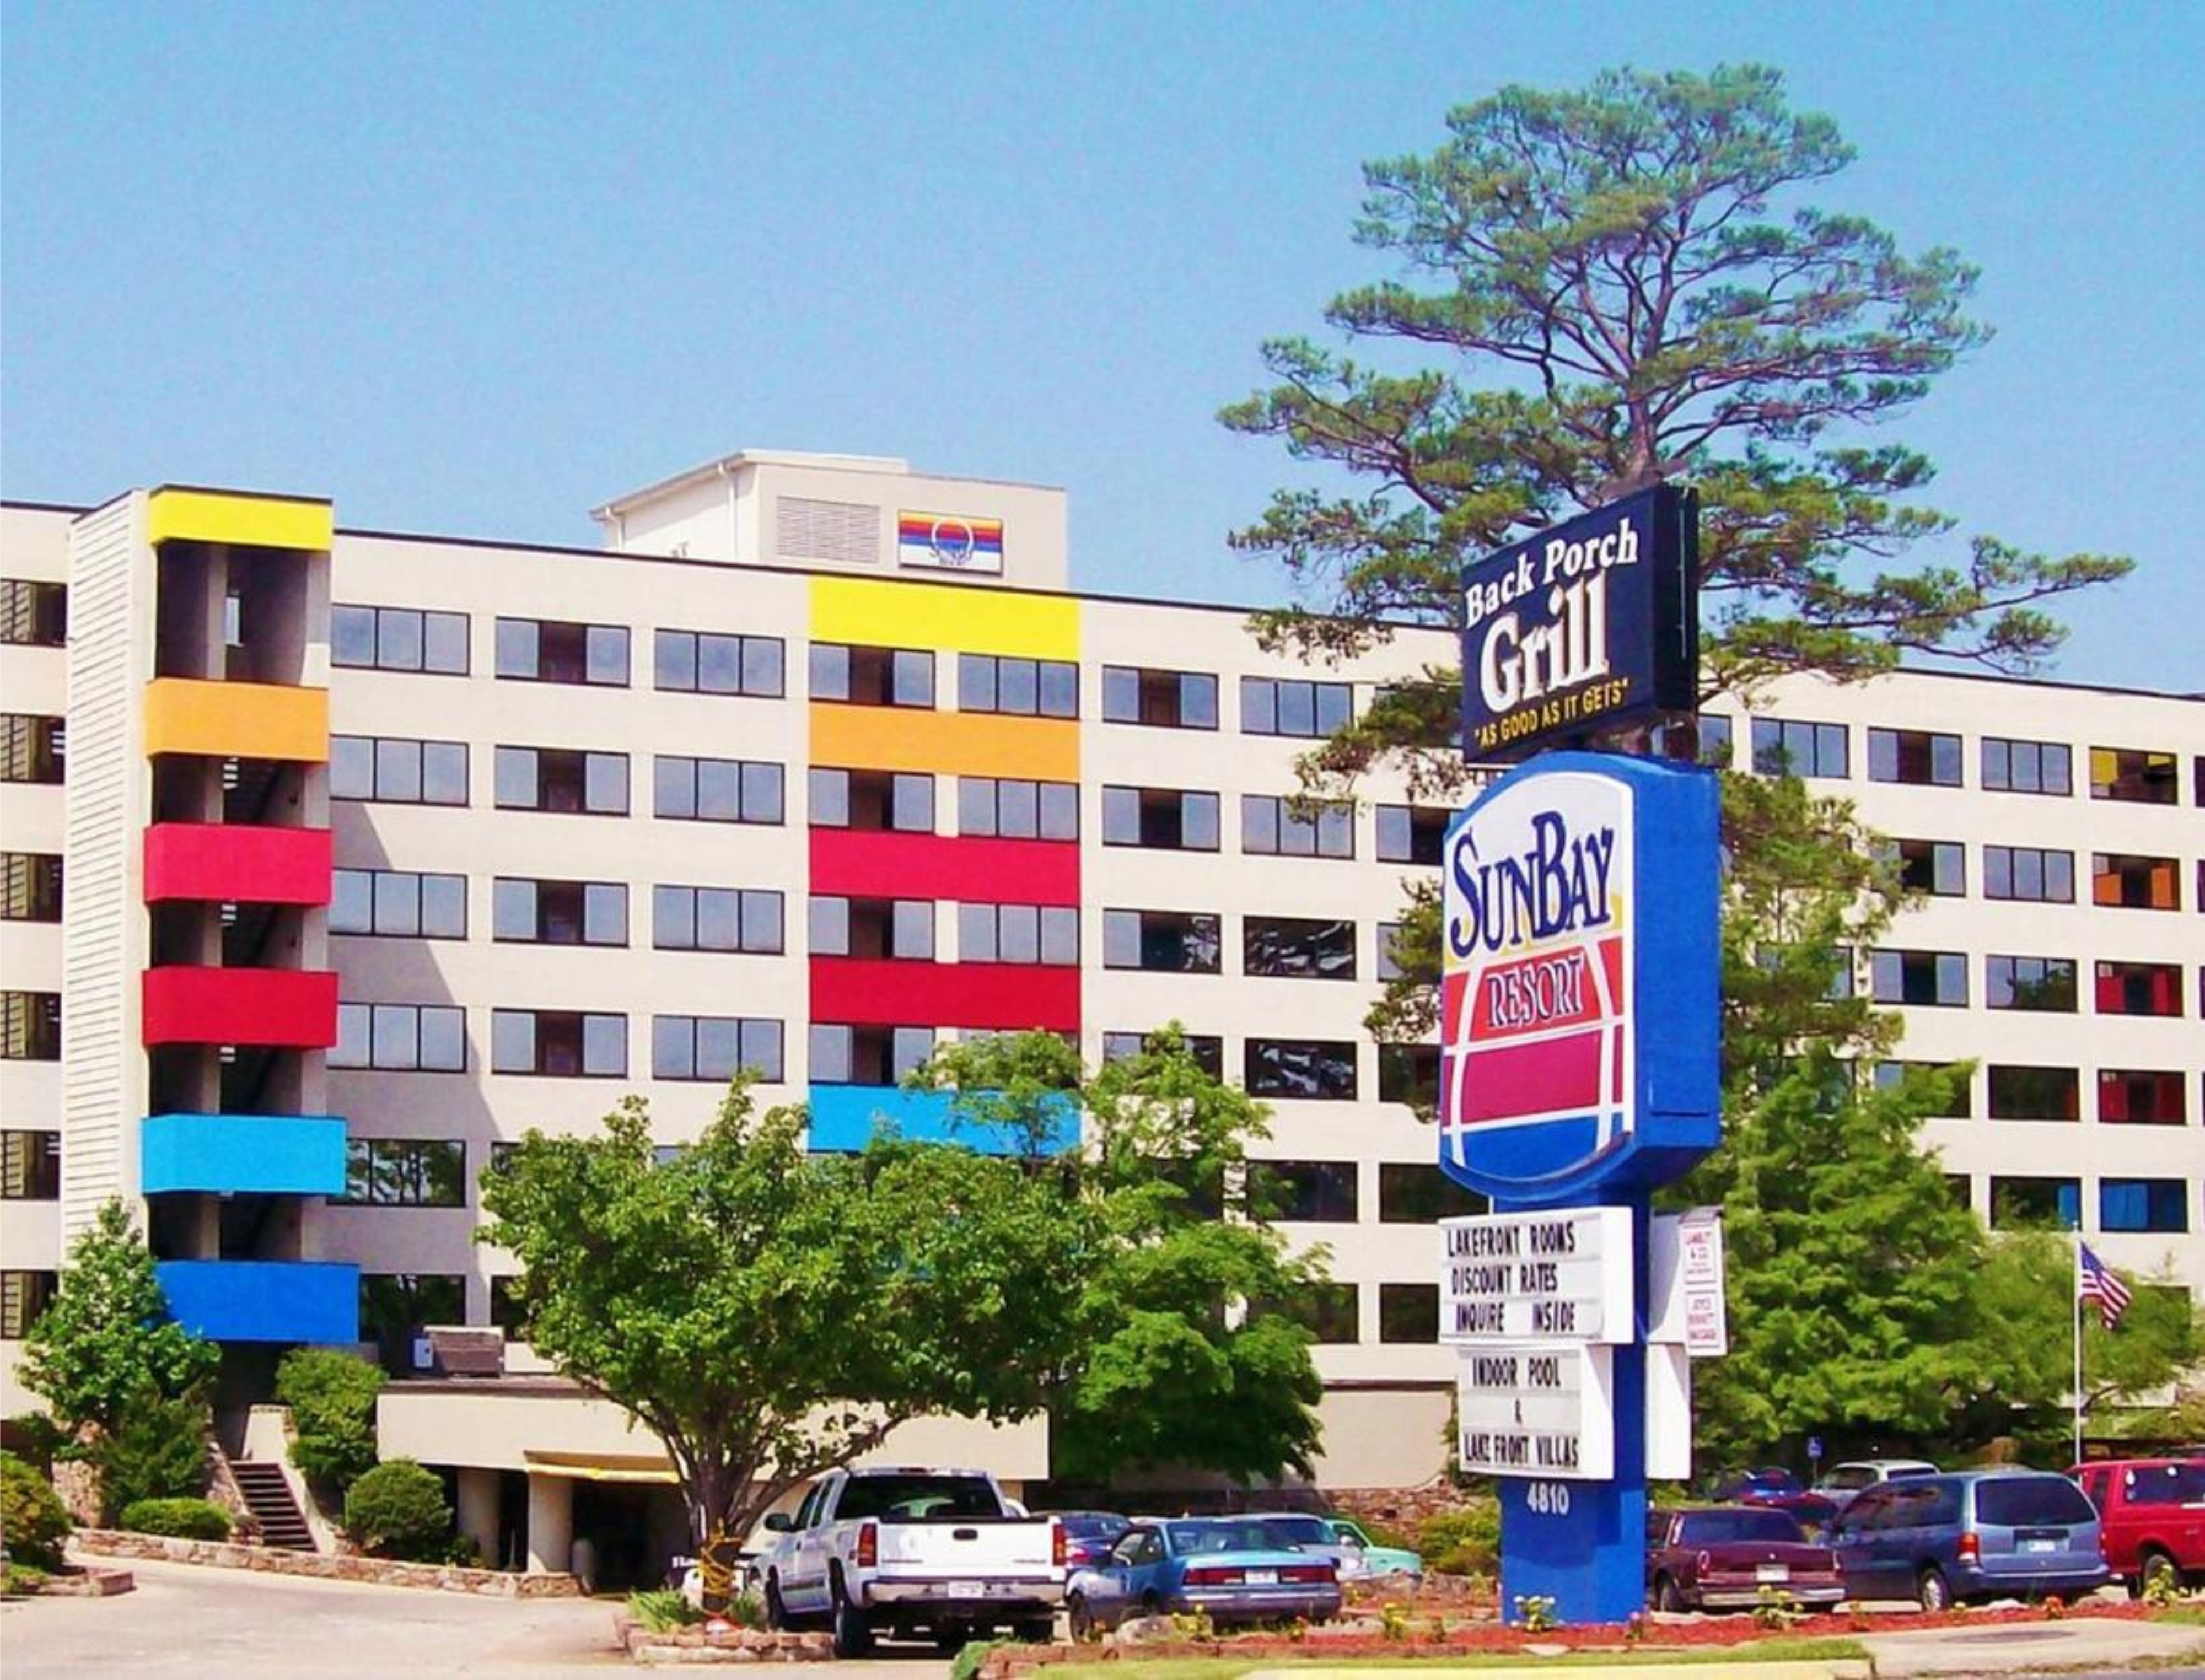 Building view of SunBay Resort